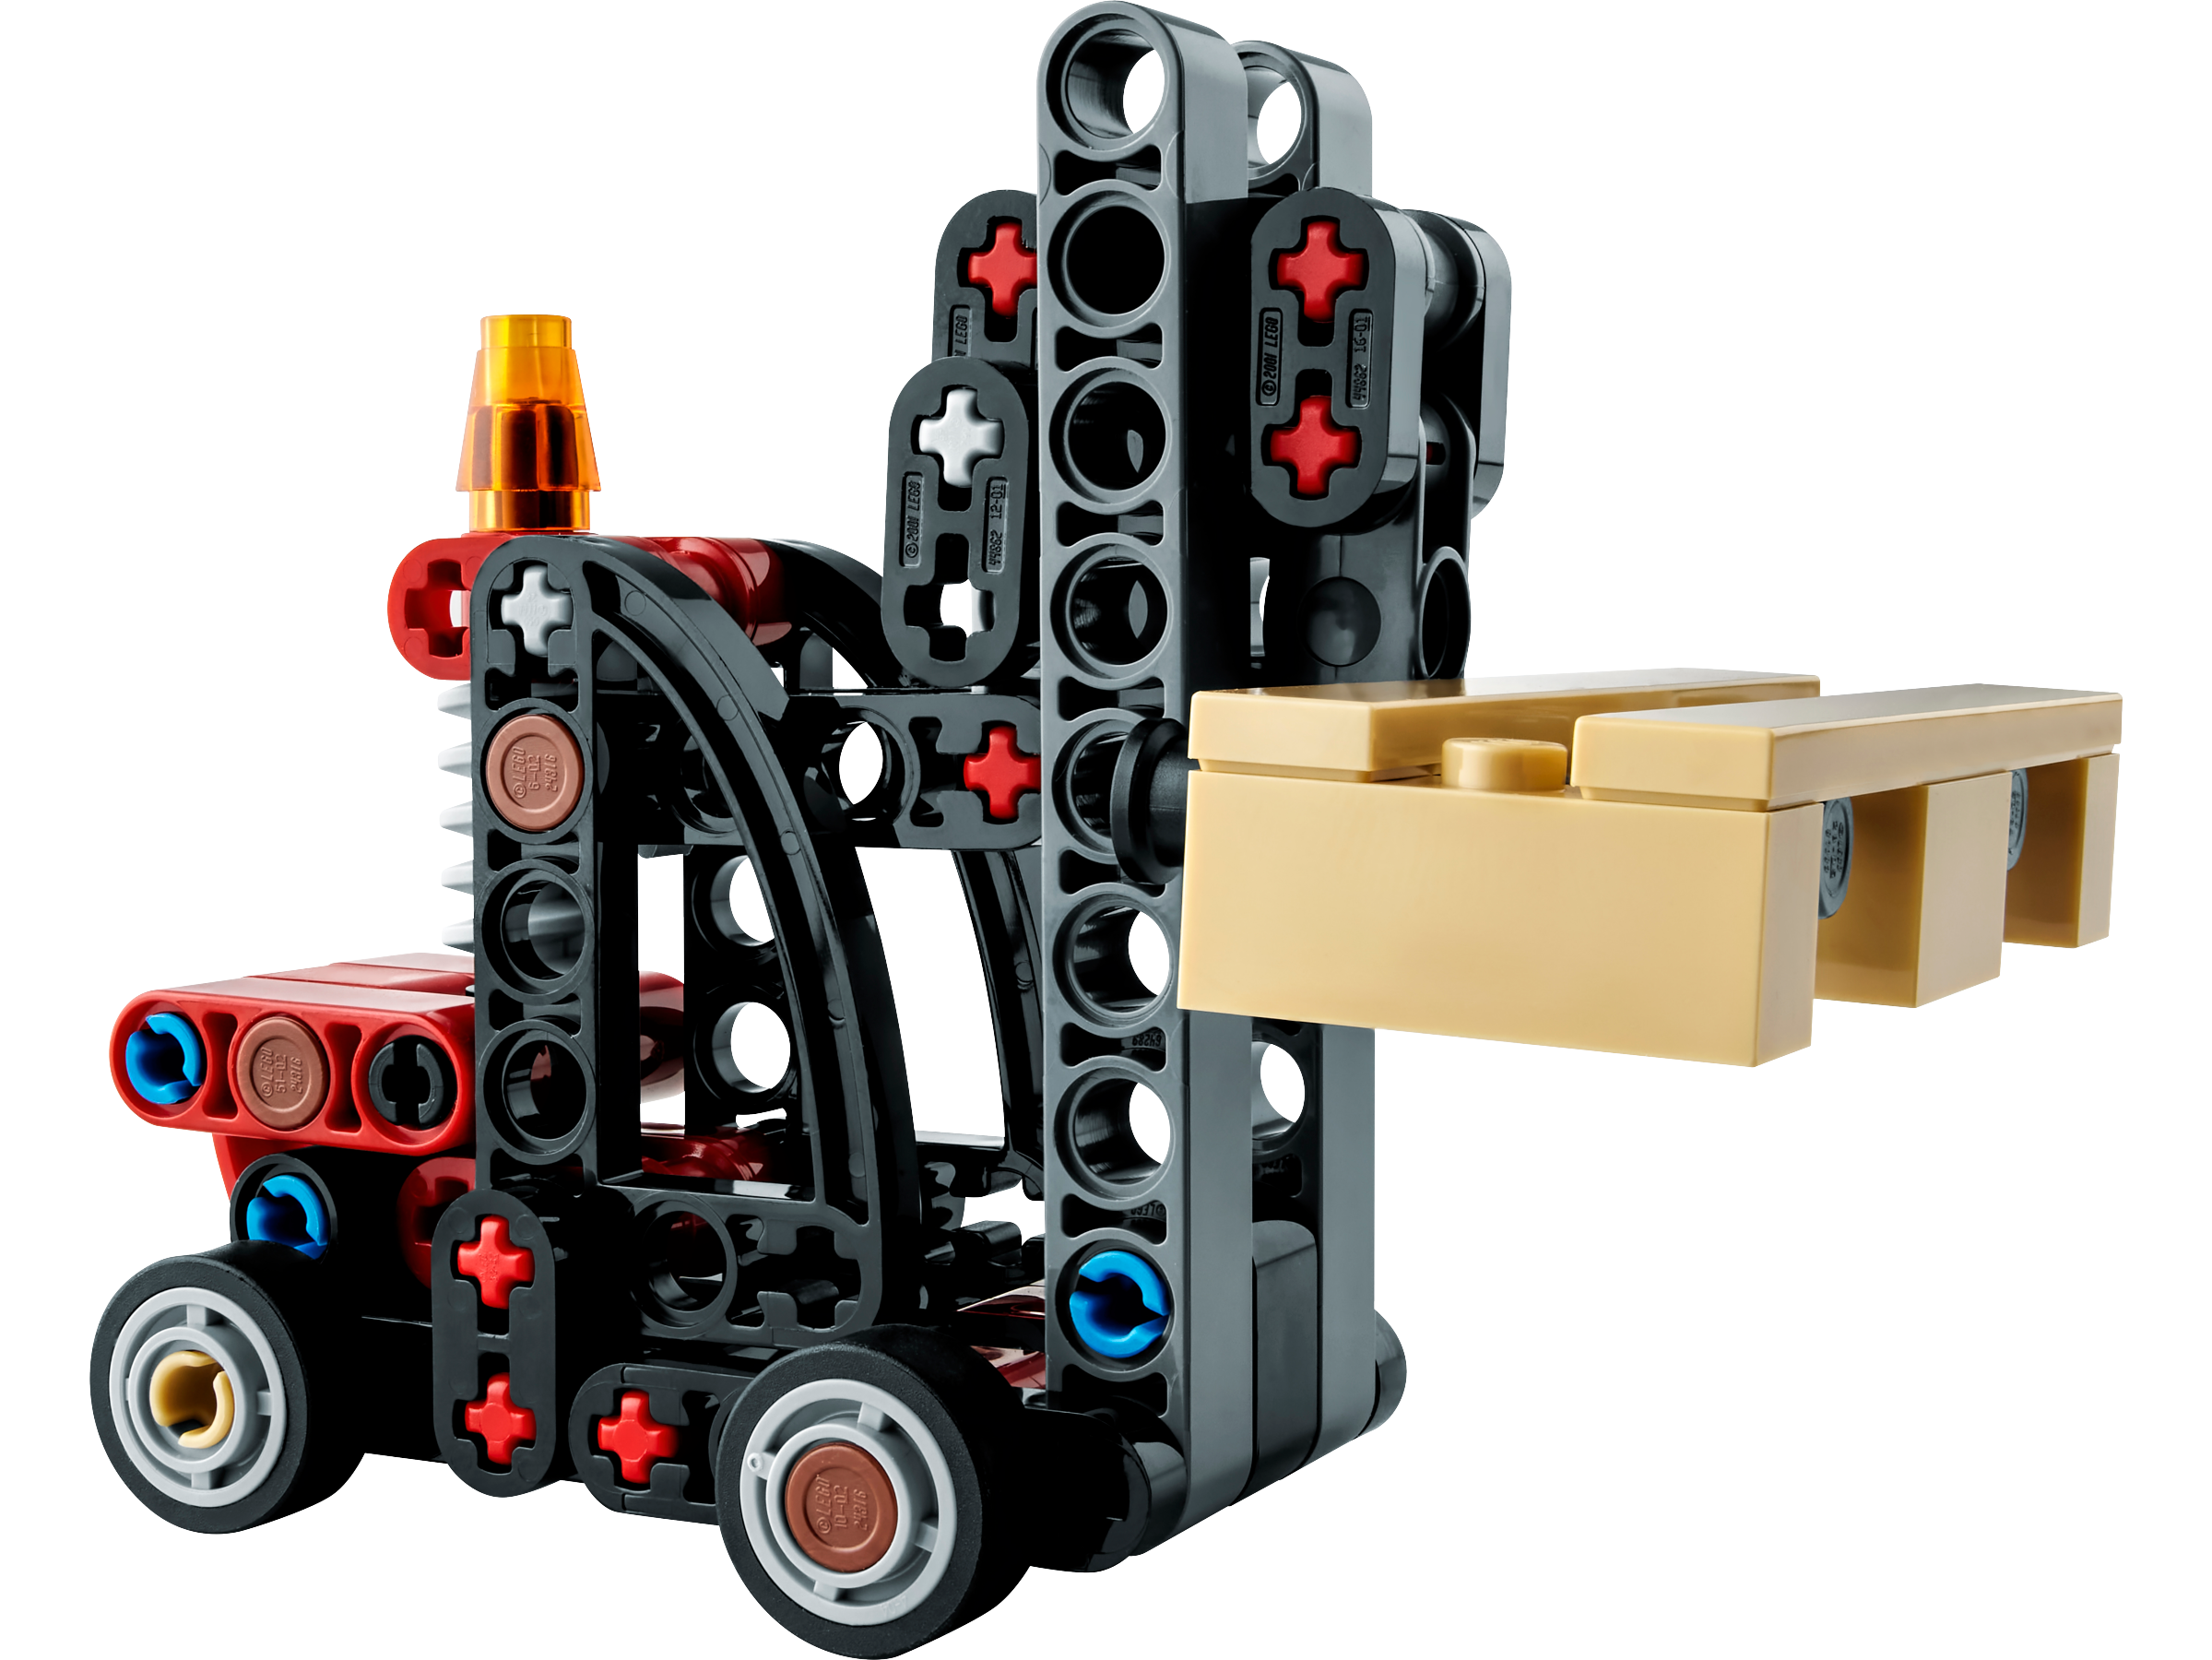 Baril de gros Legos réf 5355 - Lego